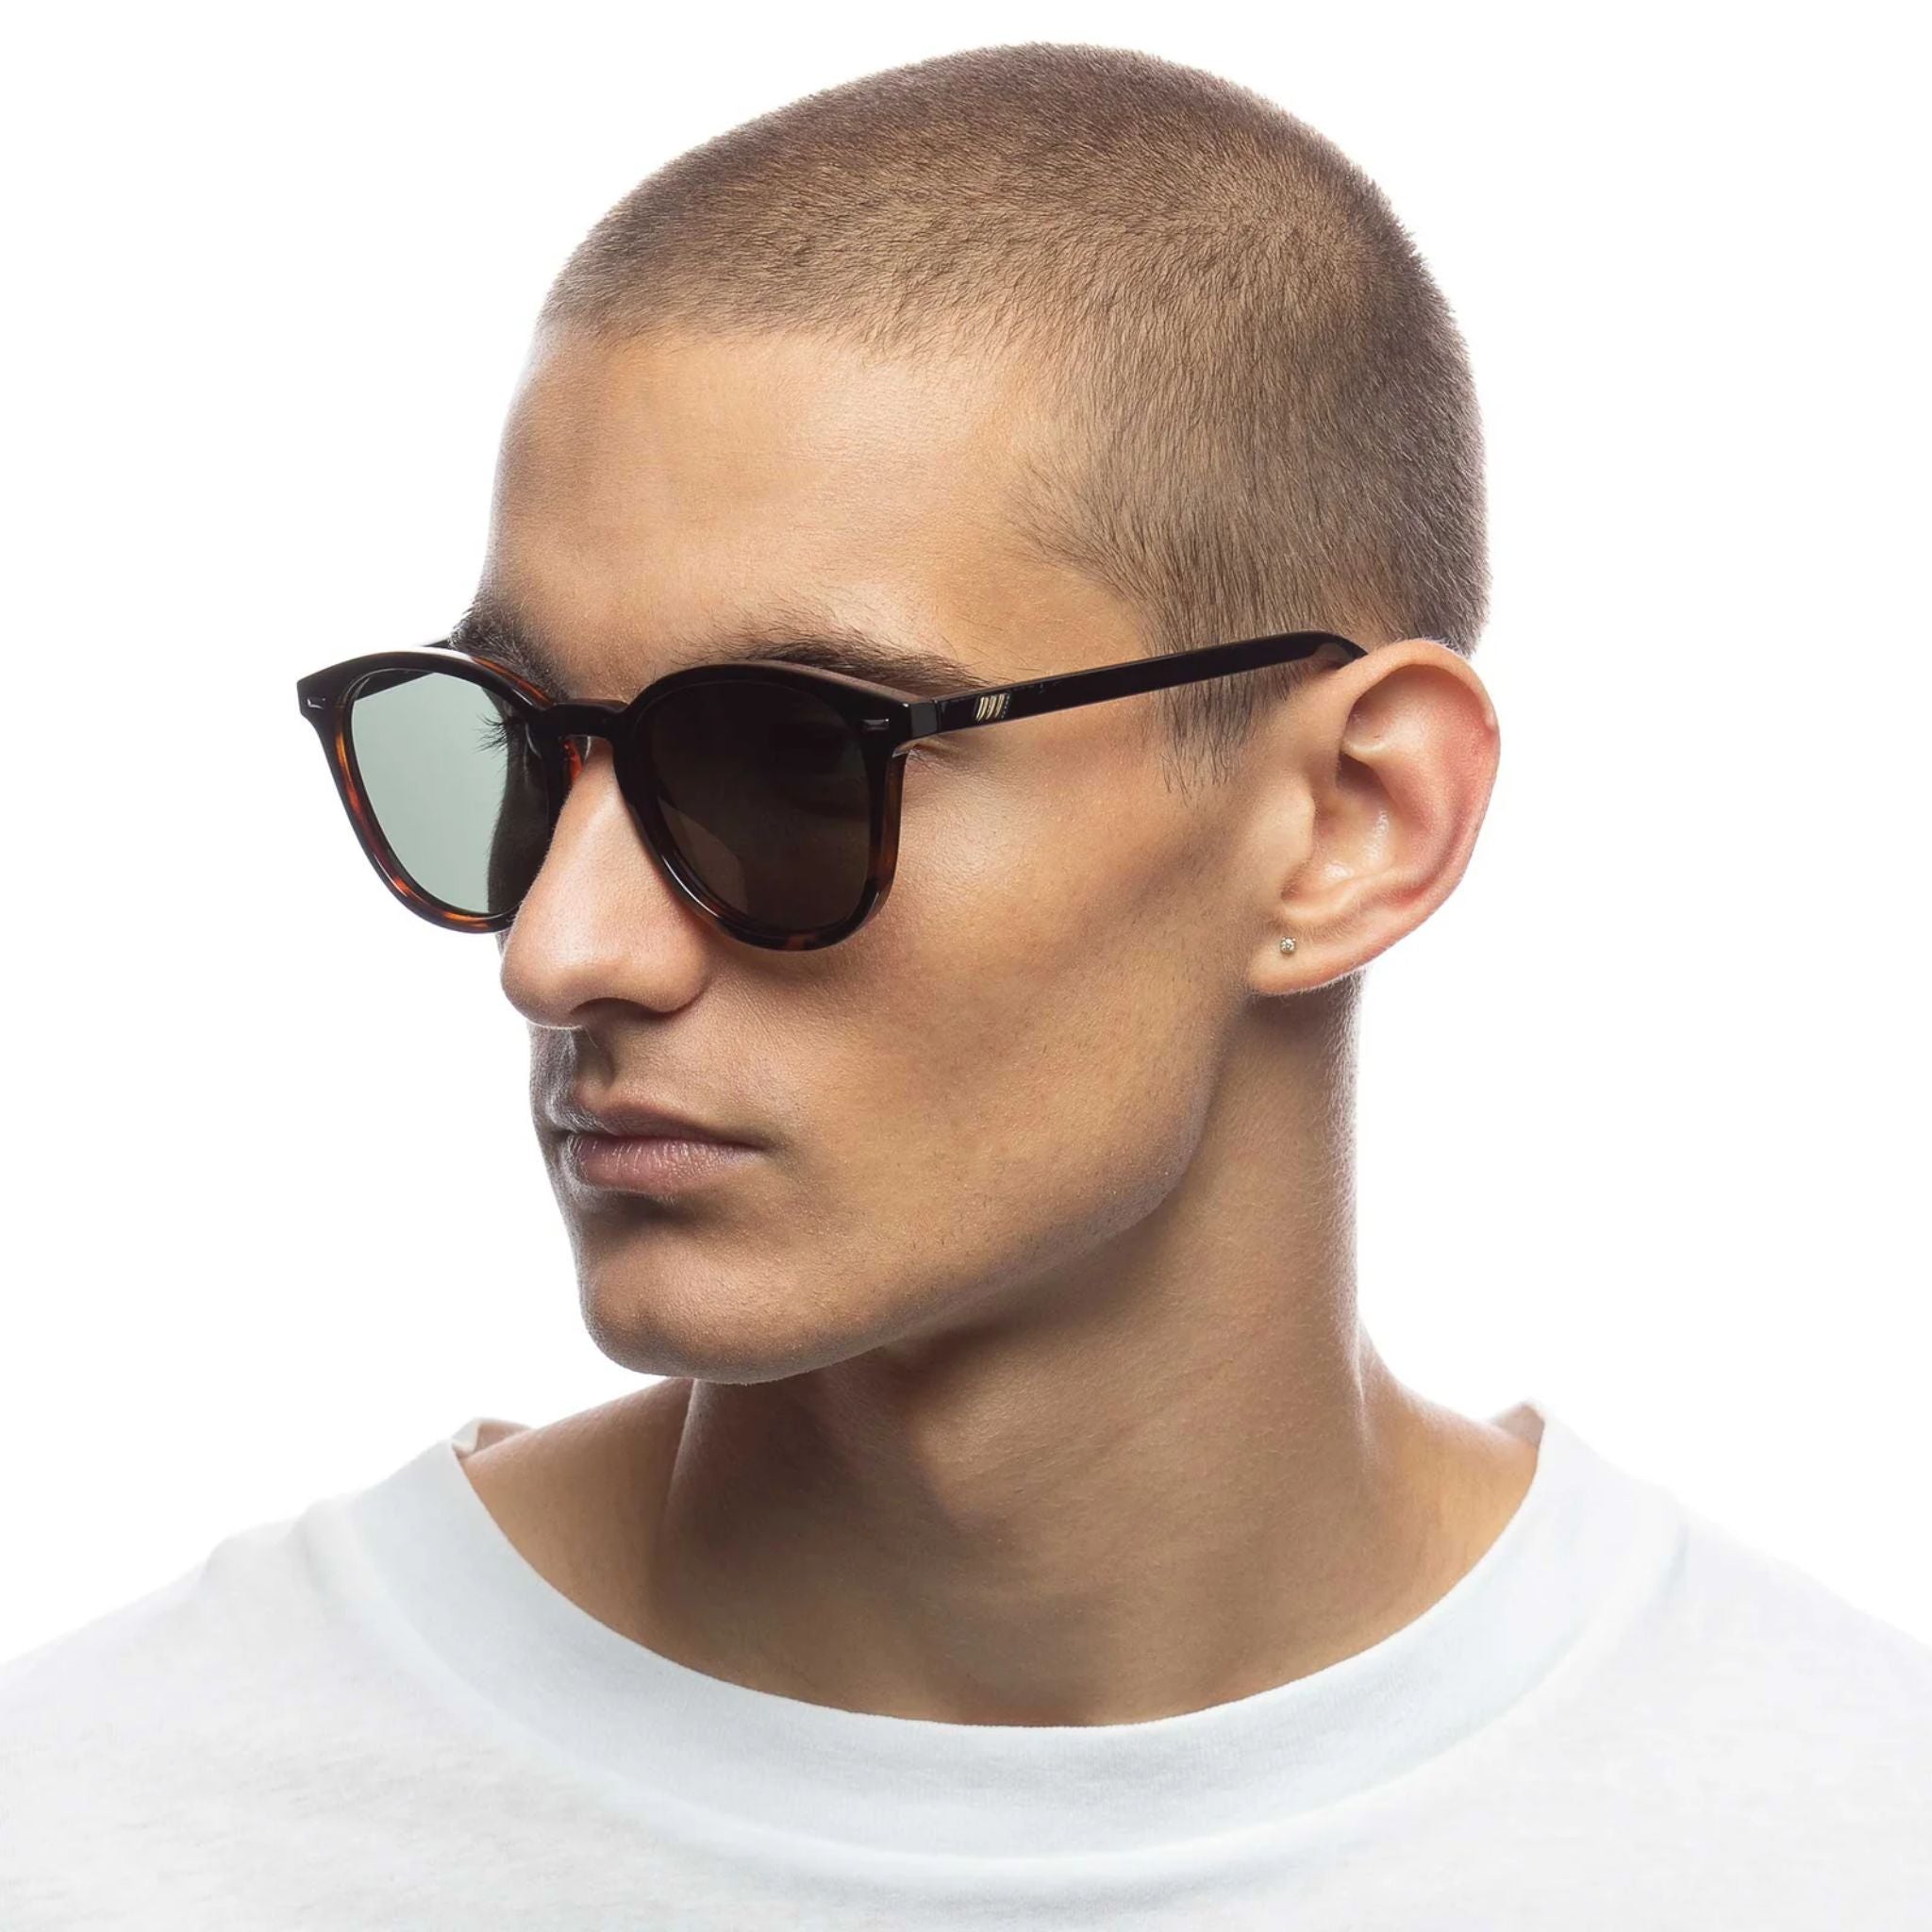 Buy Black Sunglasses for Men by LEVIS Online | Ajio.com